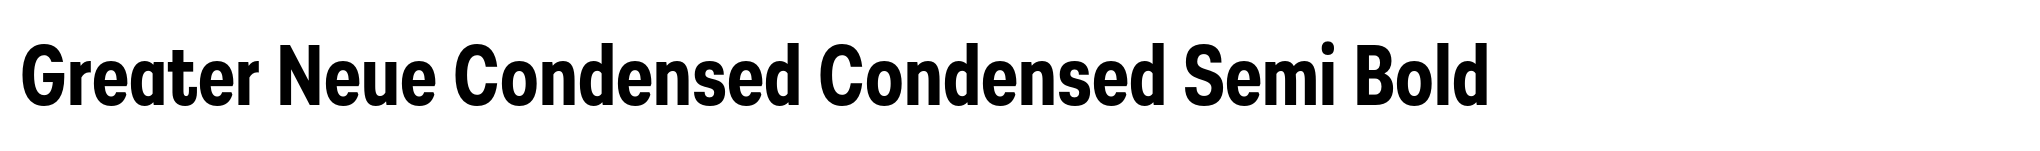 Greater Neue Condensed Condensed Semi Bold image